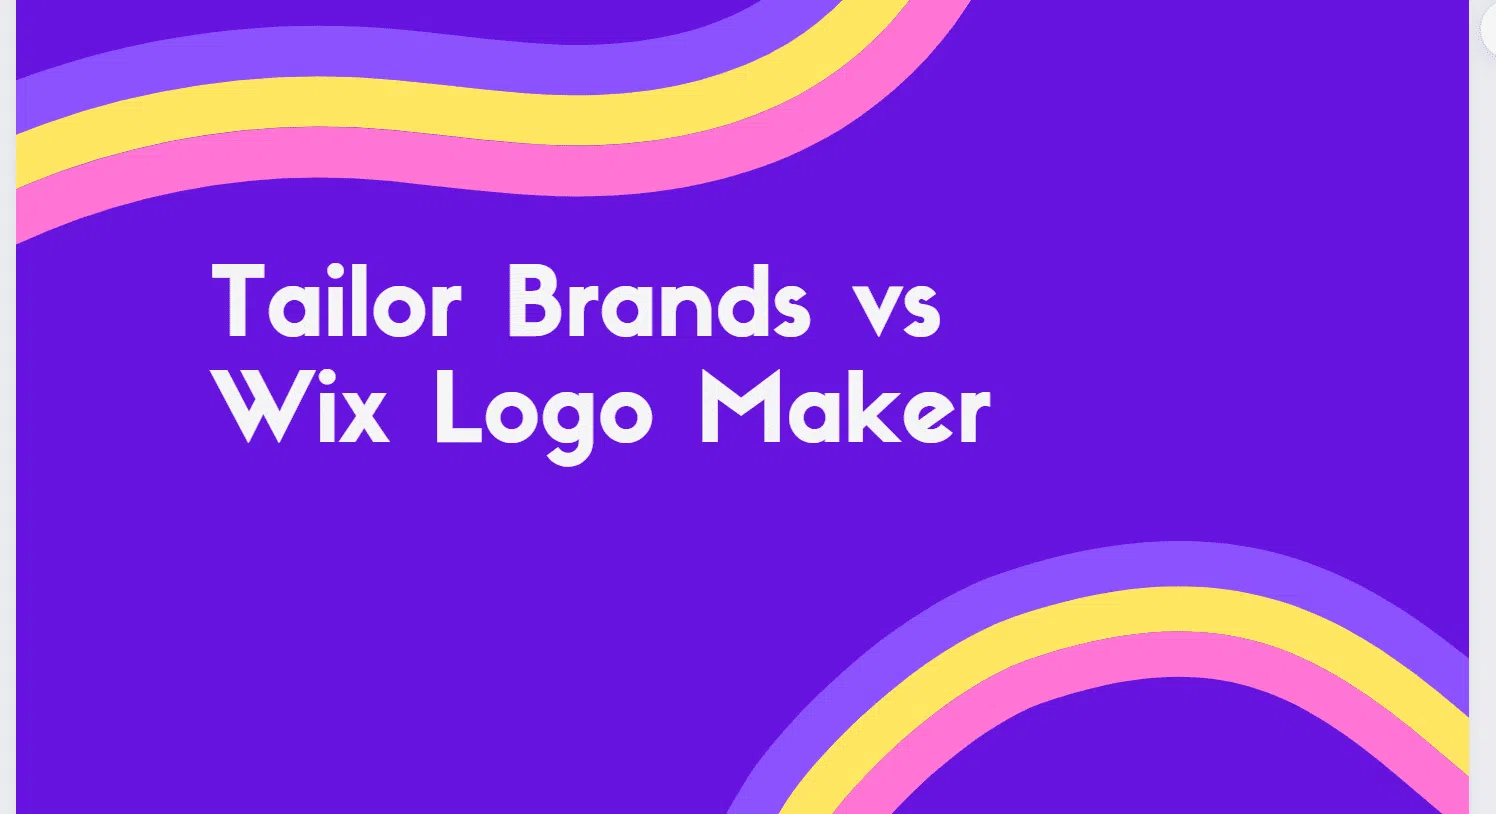 Tailor Brands vs Wix Logo Maker